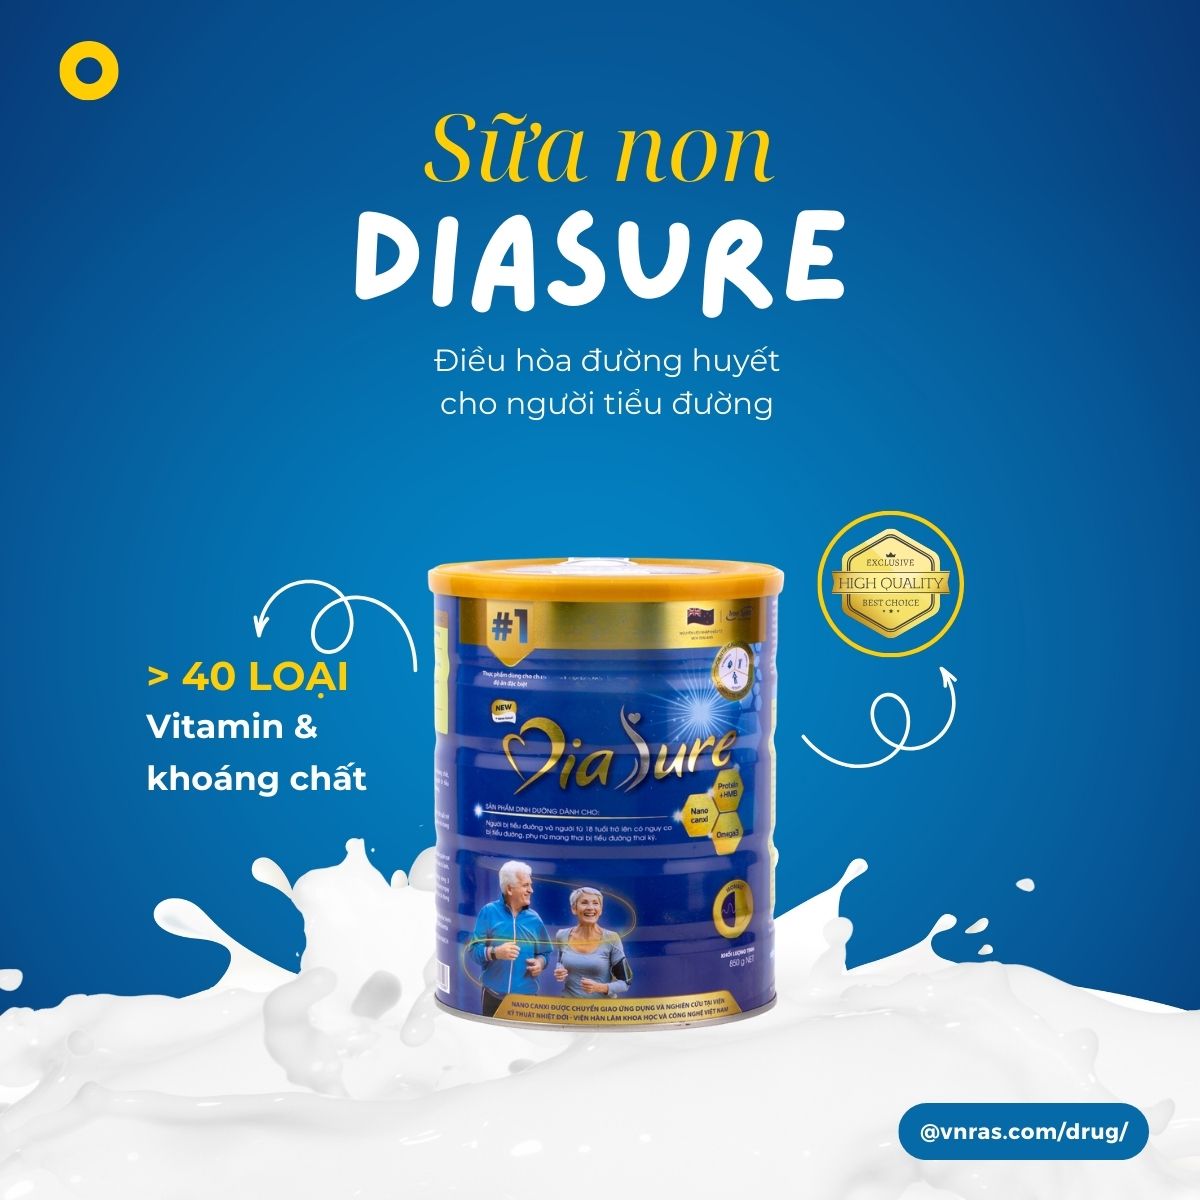 Sữa non Diasure